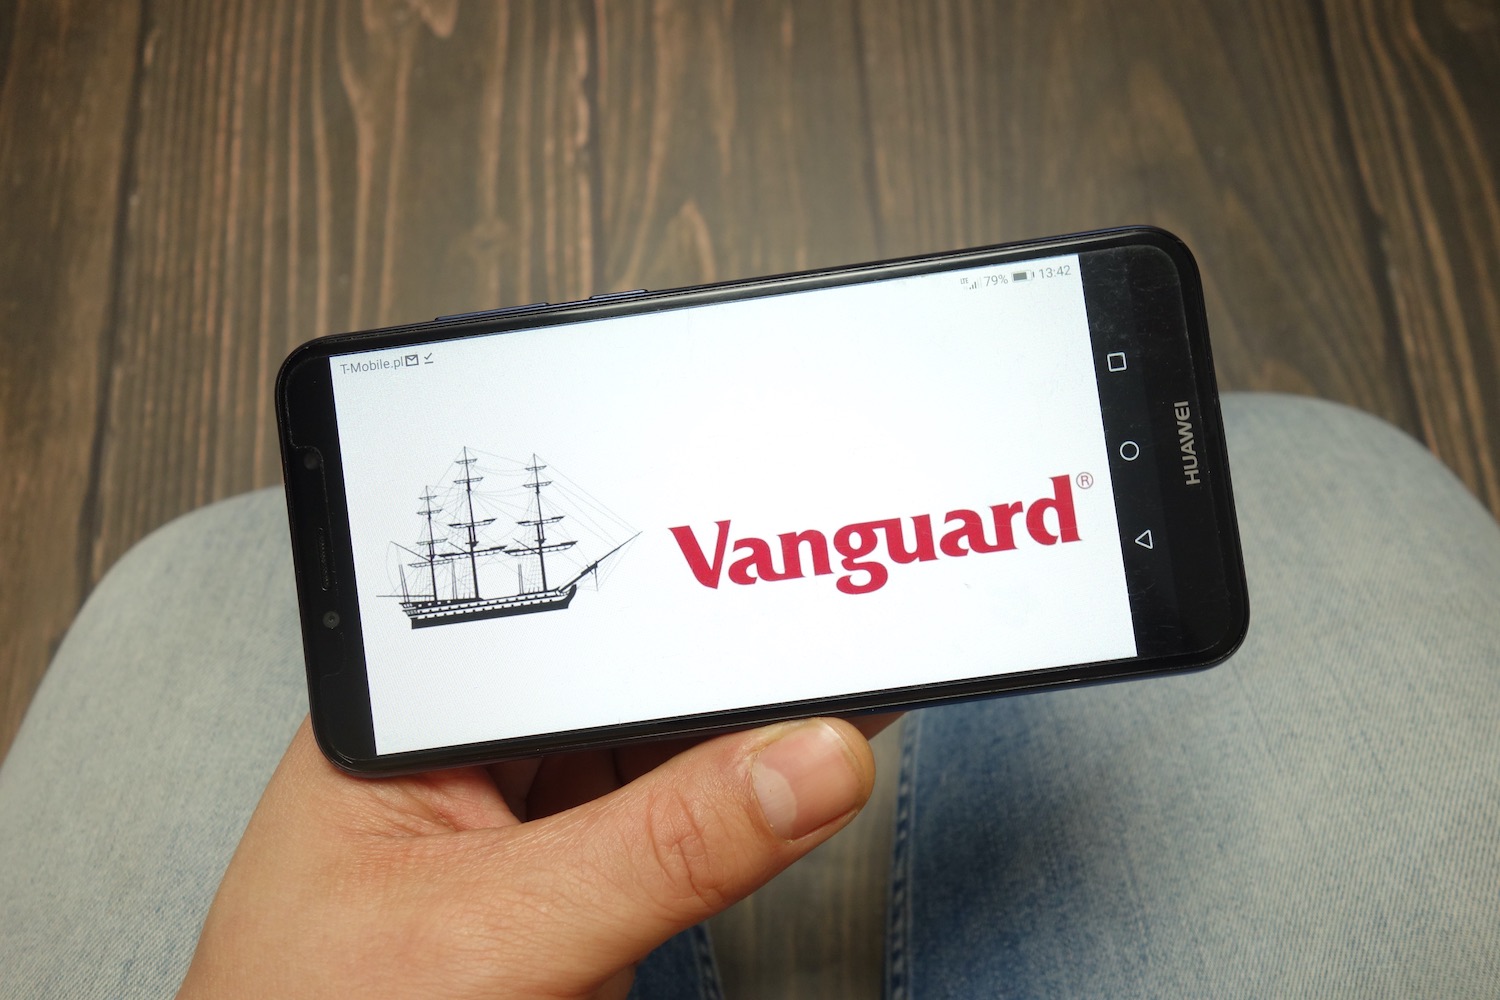 Vanguard Ran Its Digital Asset-Backed Securities Pilot in 40 Minutes